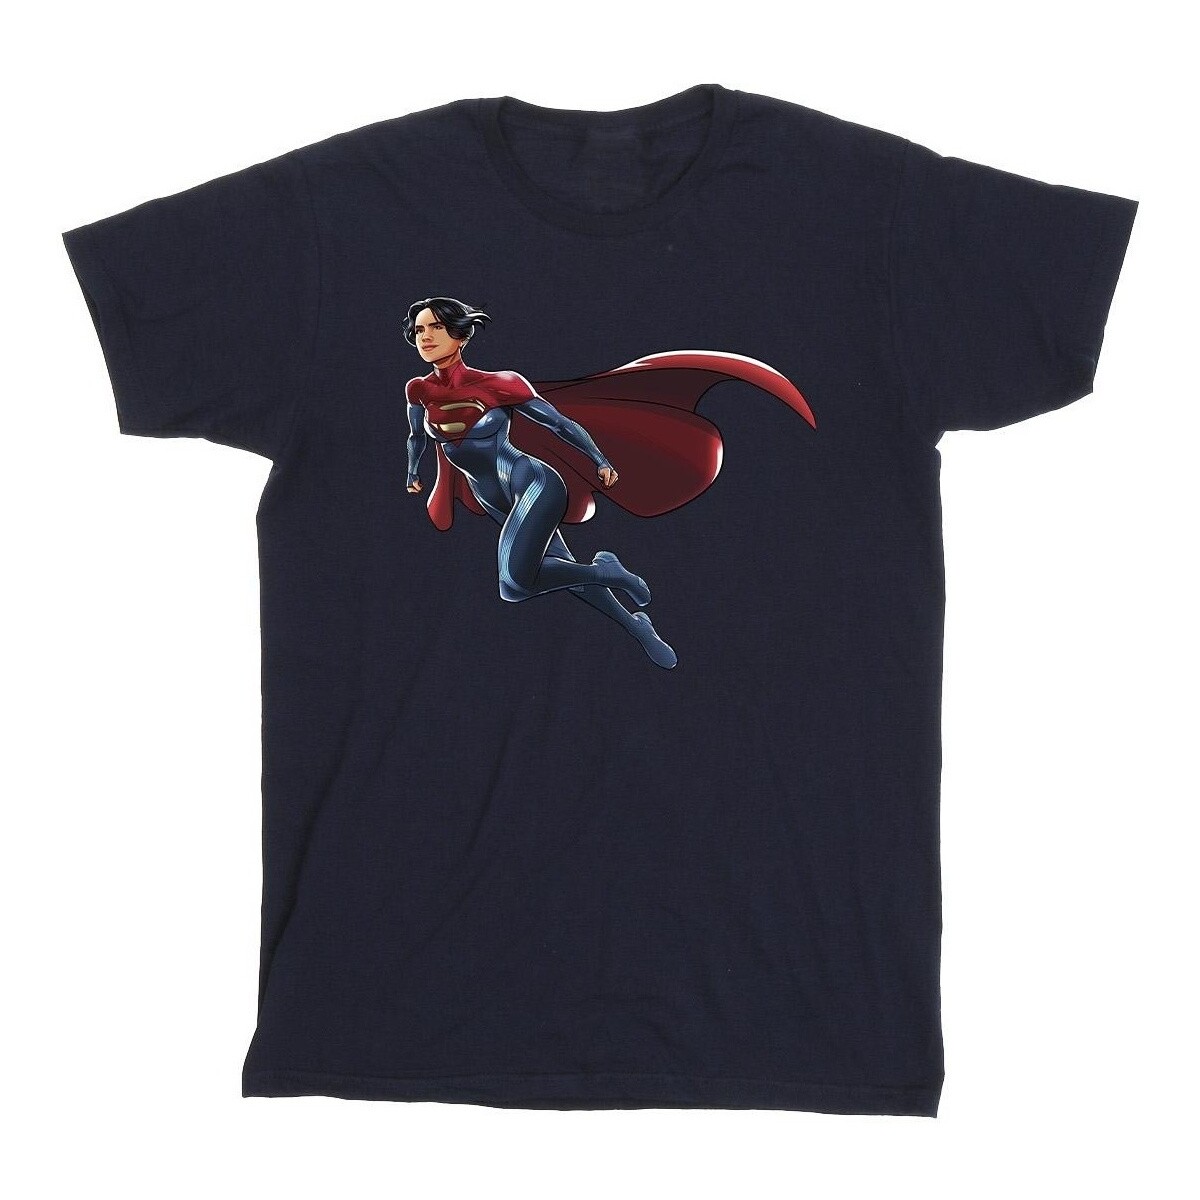 textil Hombre Camisetas manga larga Dc Comics The Flash Supergirl Azul